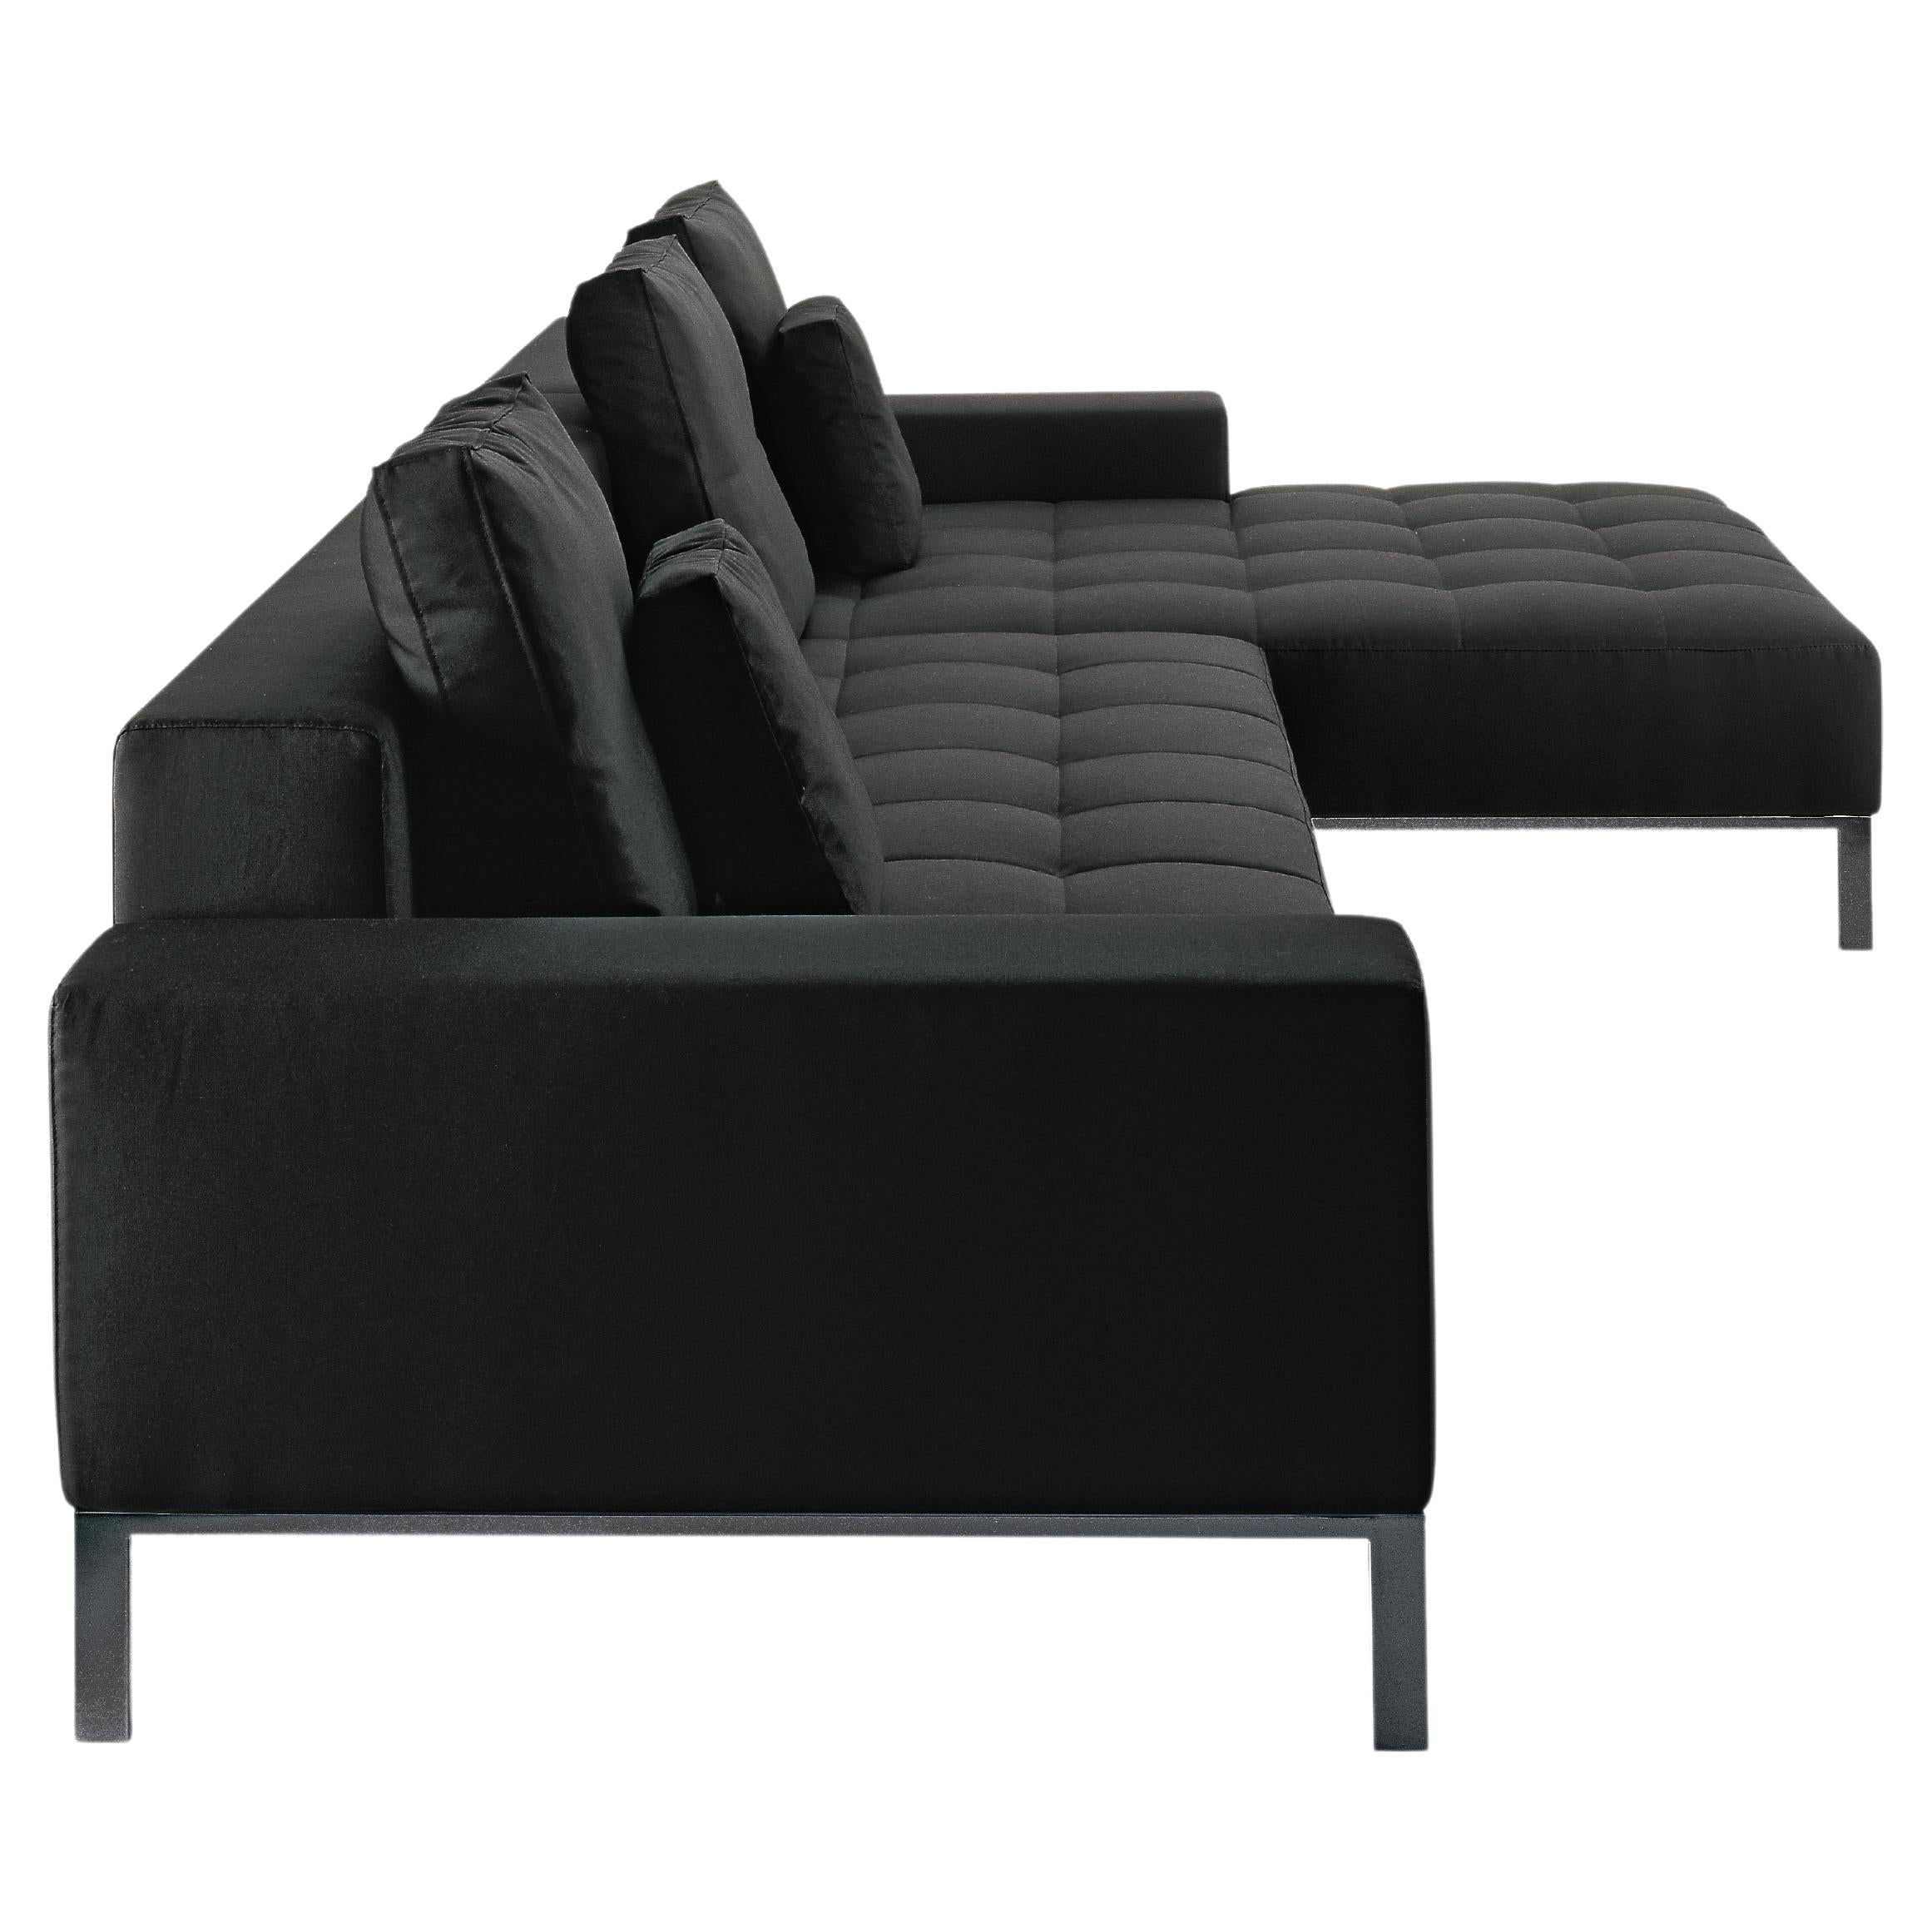 Zanotta Alfa Modular Sofa in Vico Fabric with Black Steel Frame by Emaf Progetti For Sale